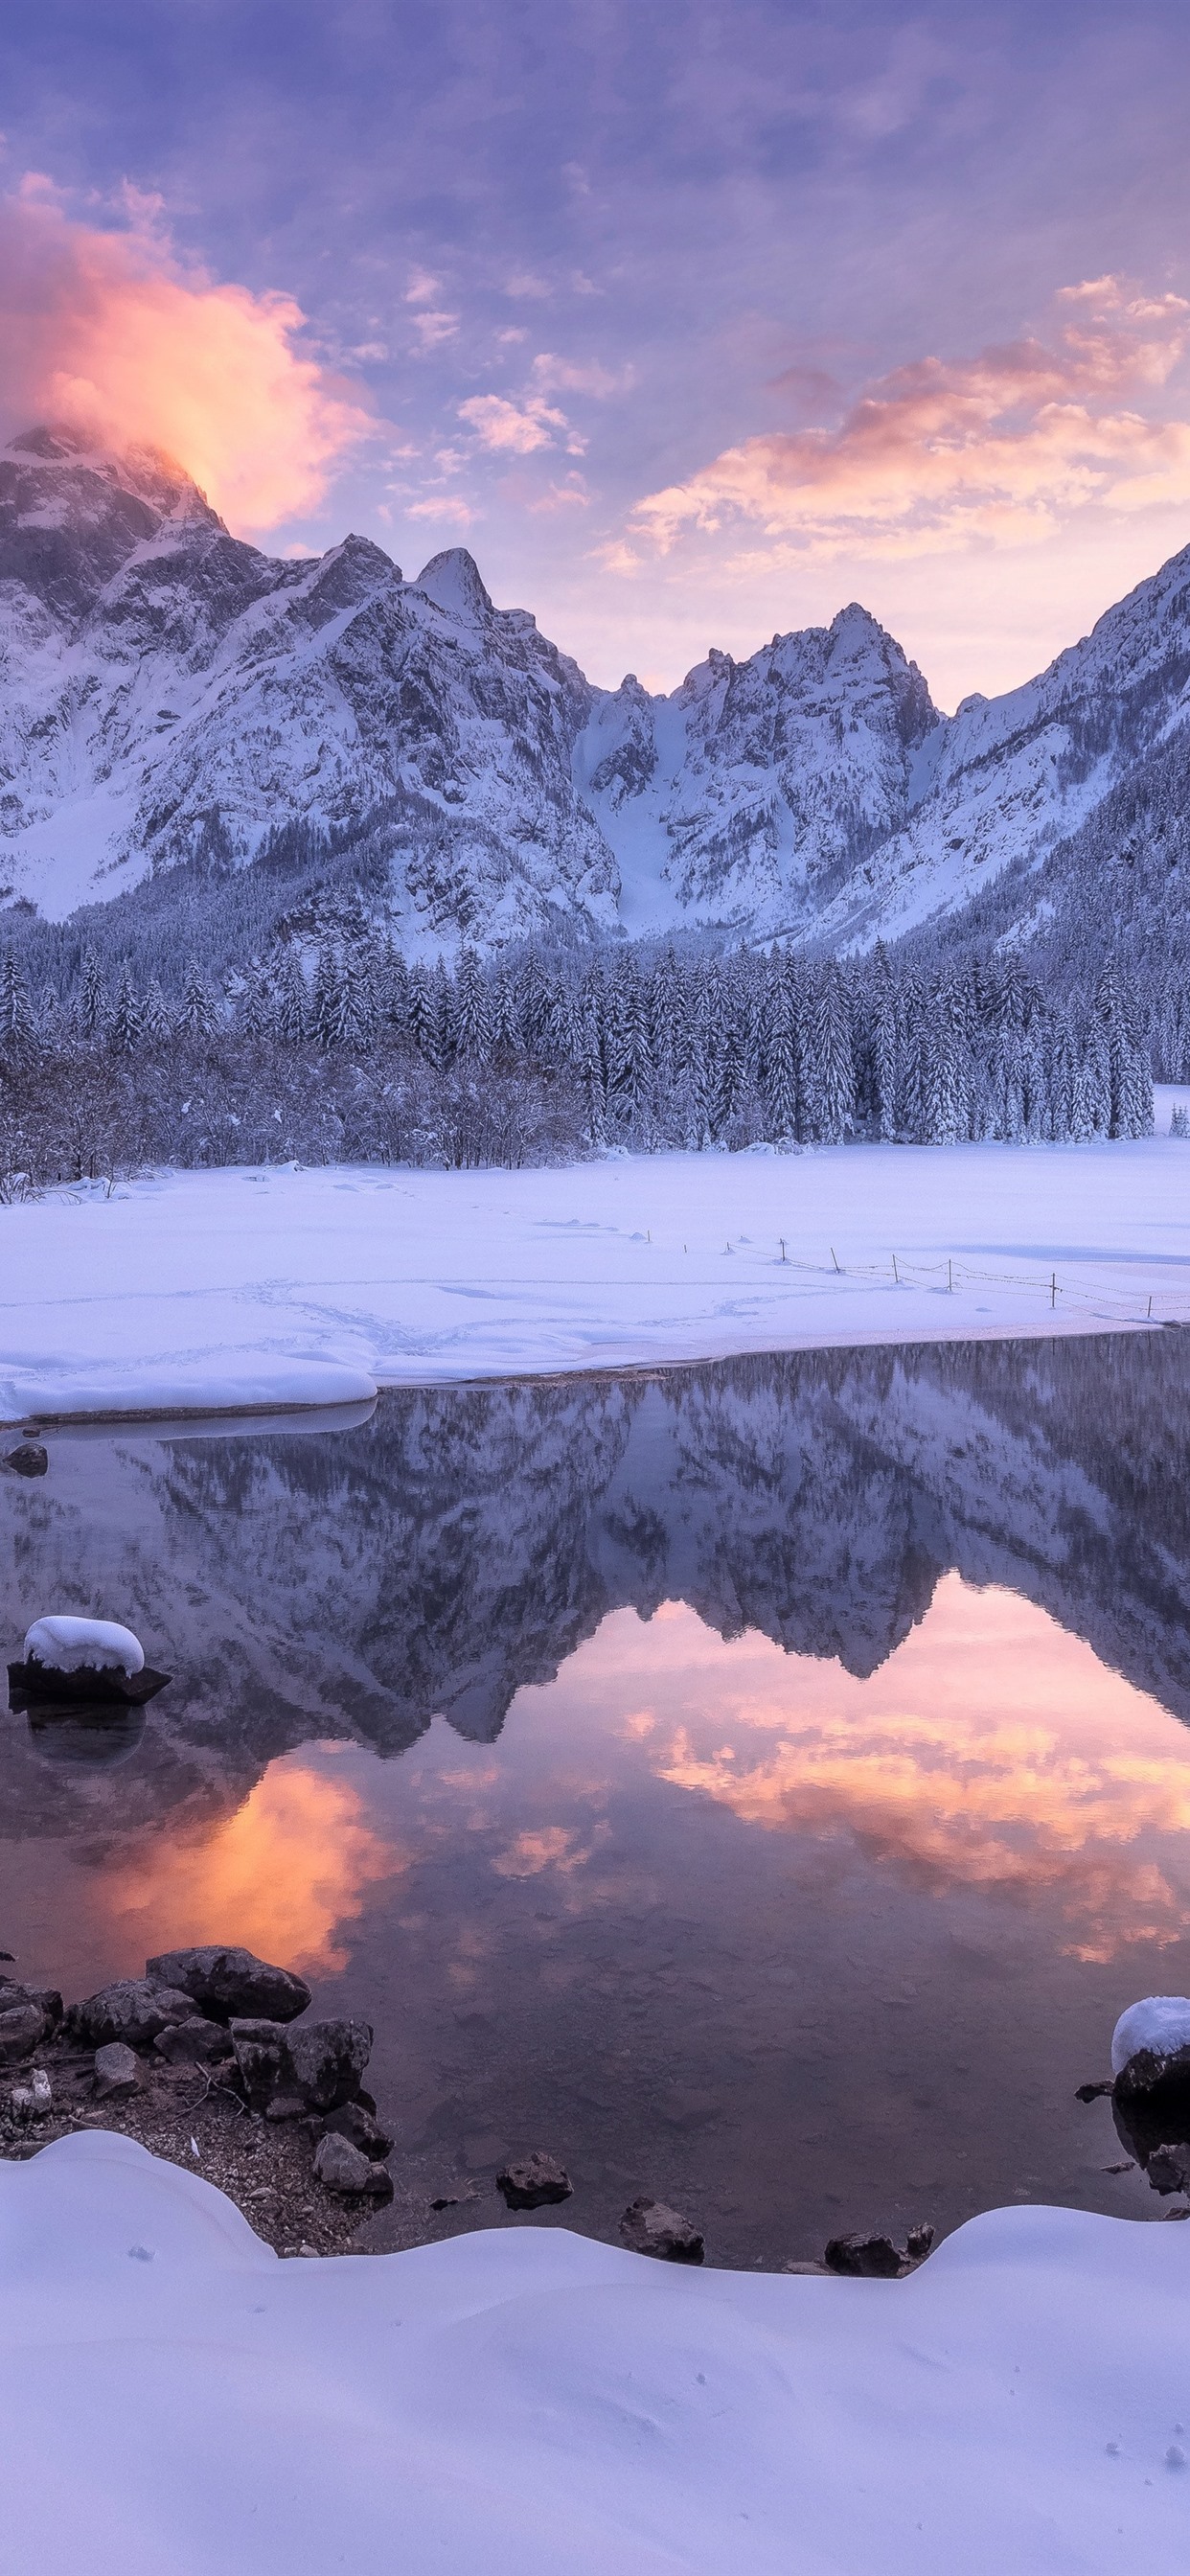 Wallpaper Beautiful winter nature landscape, snow, lake, mountains, dusk 5120x2880 UHD 5K Picture, Image